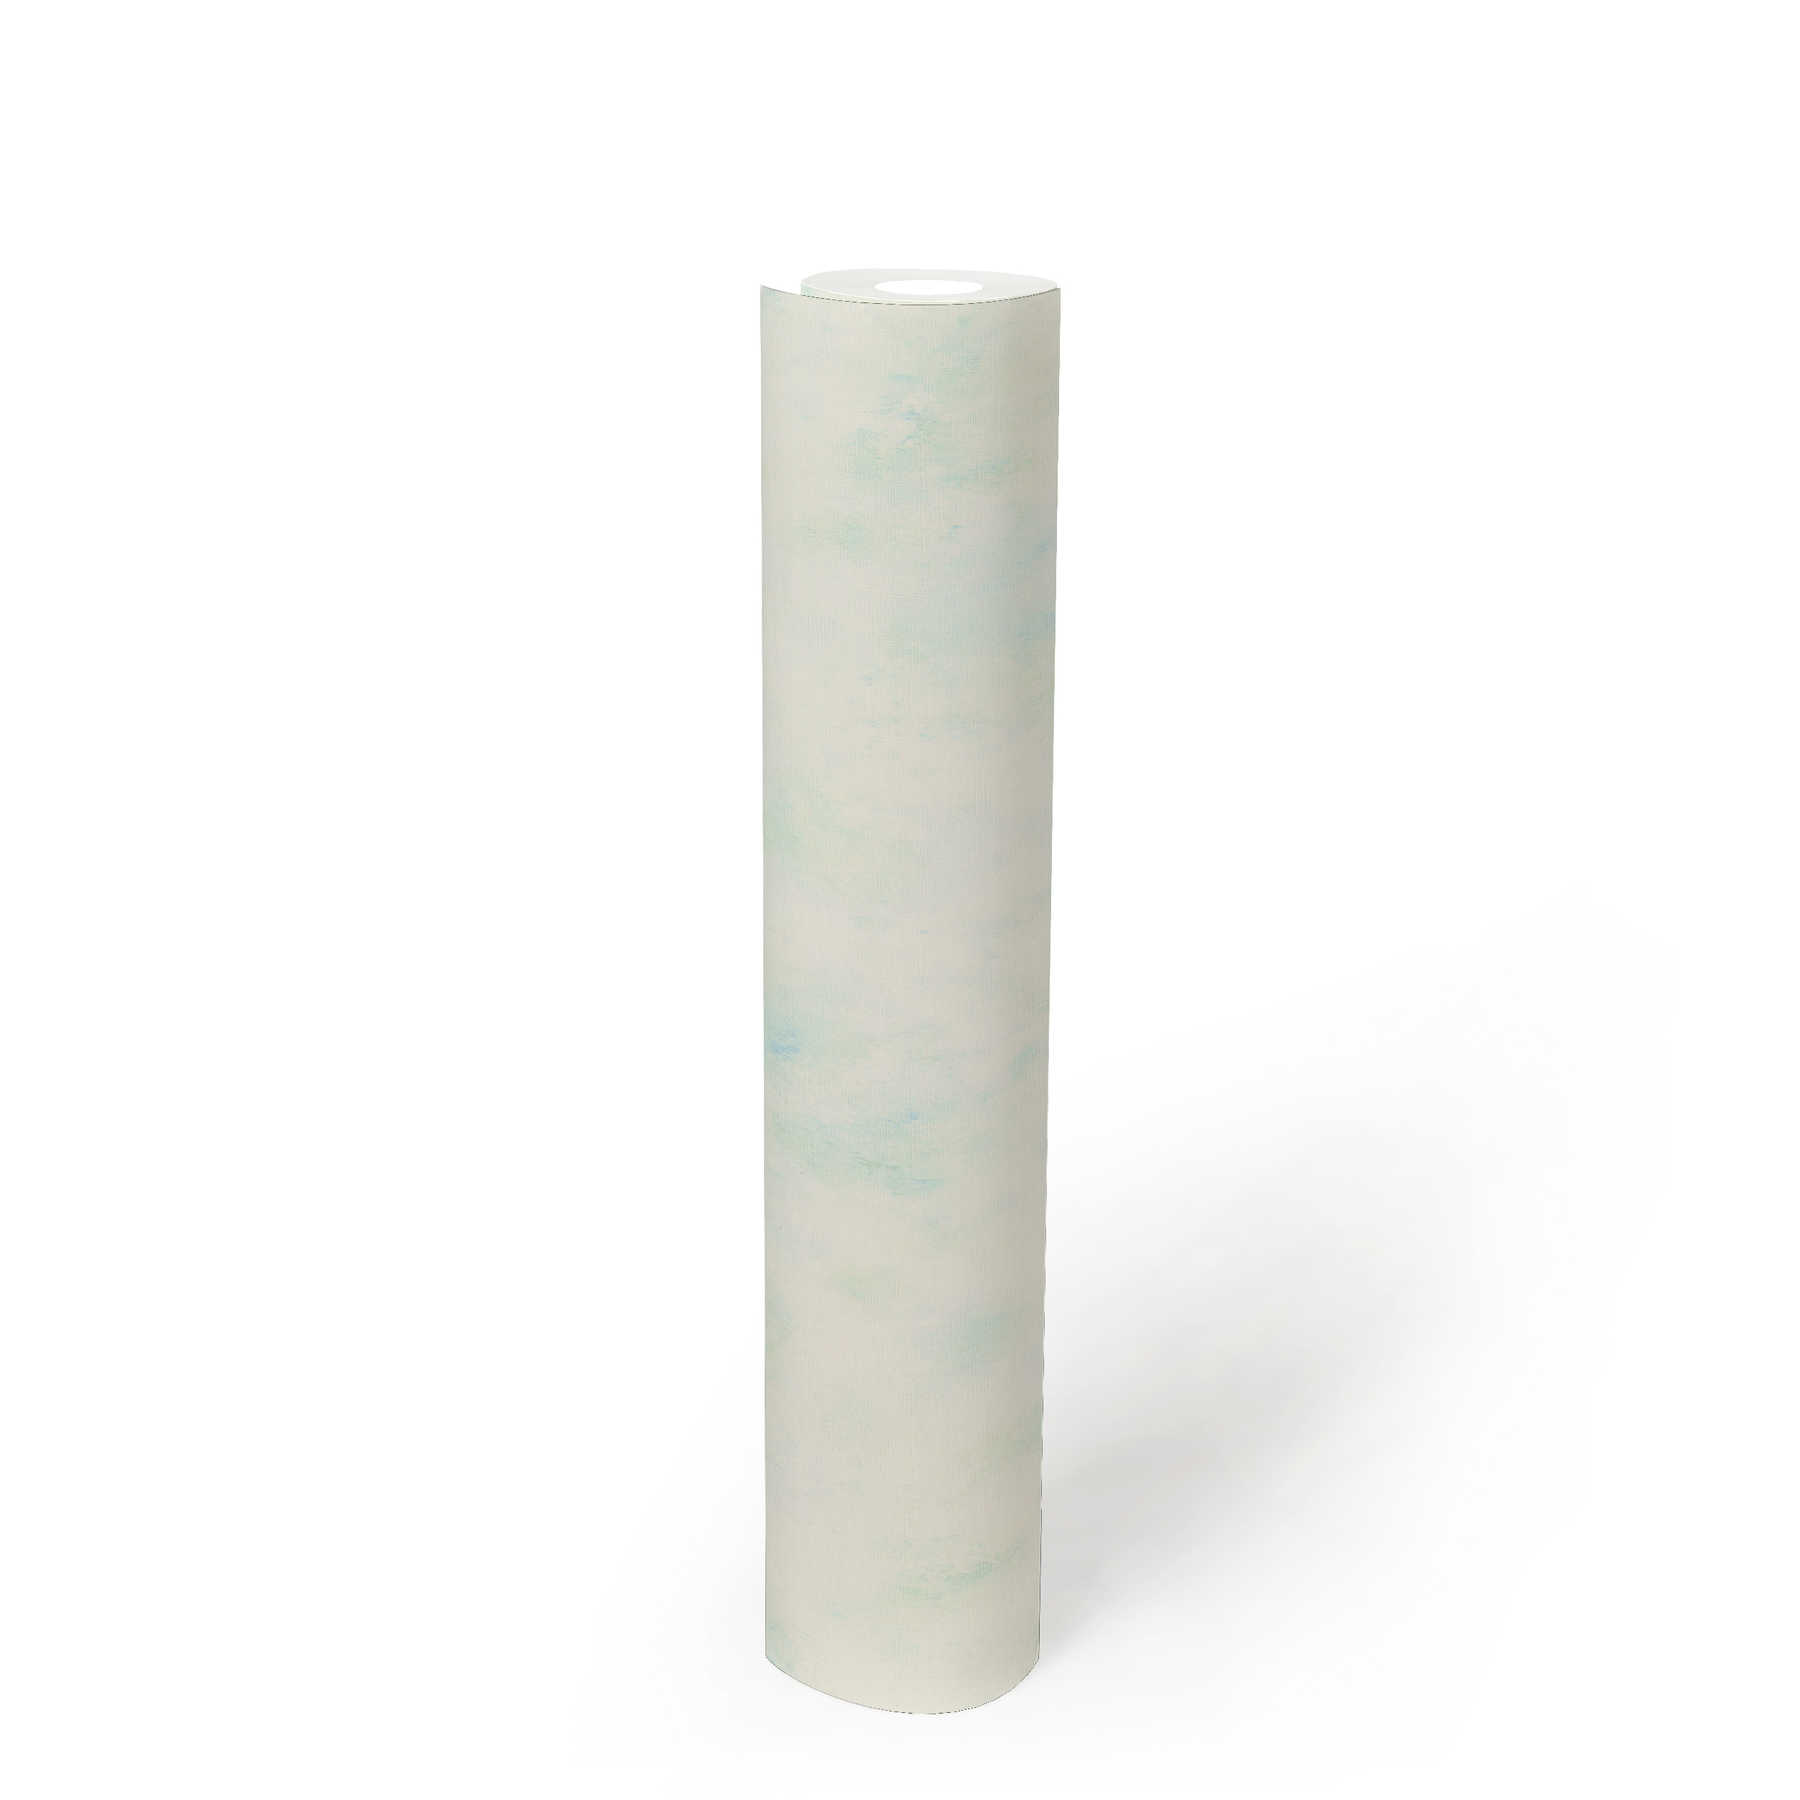             Non-woven wallpaper cream with cloudy colour effect in green
        